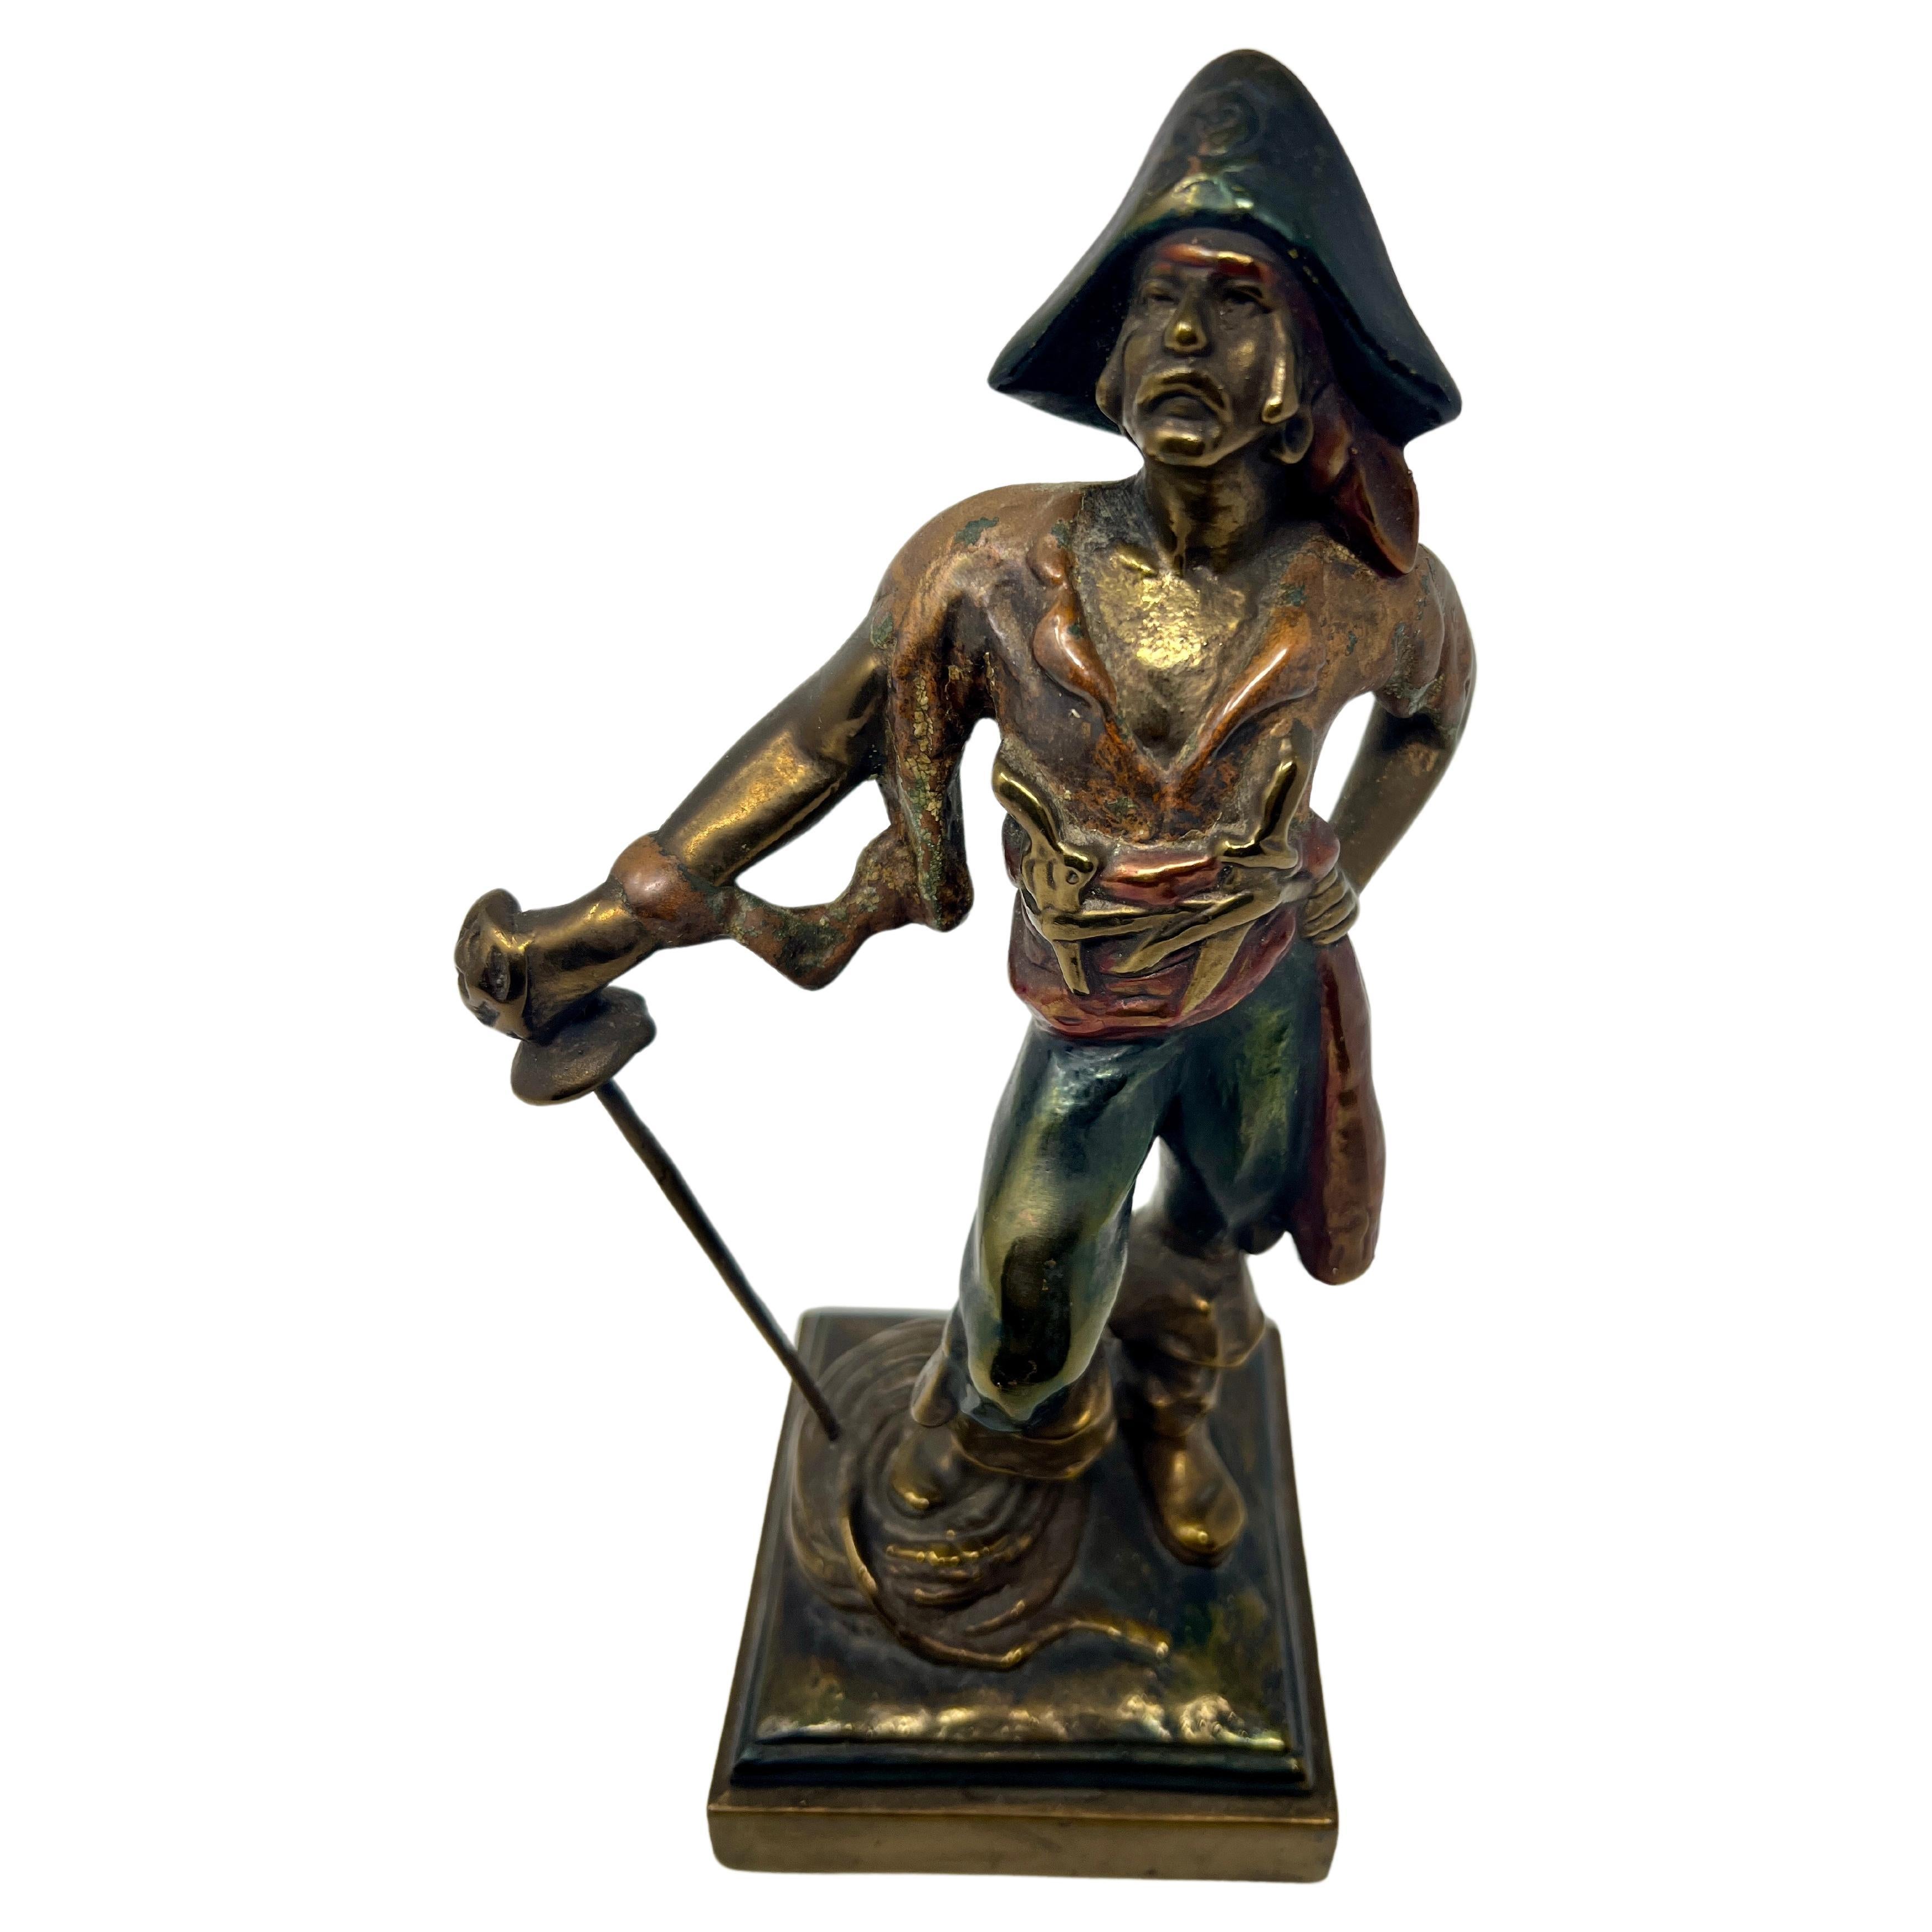 Antique German Cast Metal Pirate Figure Signed Paul Herzel (1876-1956). For Sale